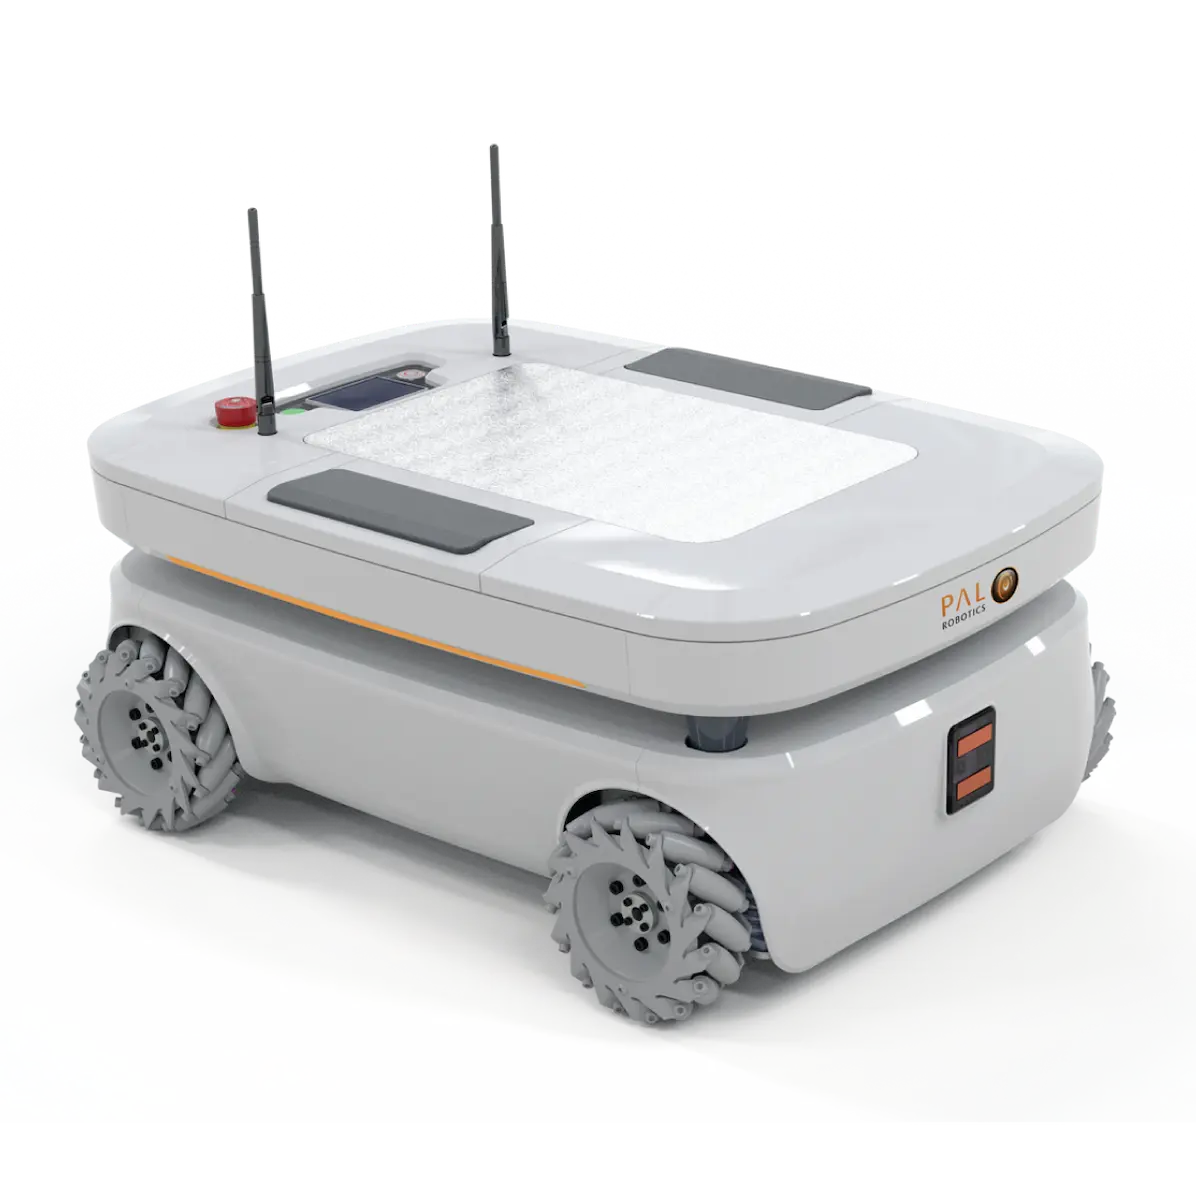 The autonomous mobile robot TIAGo Base Omni